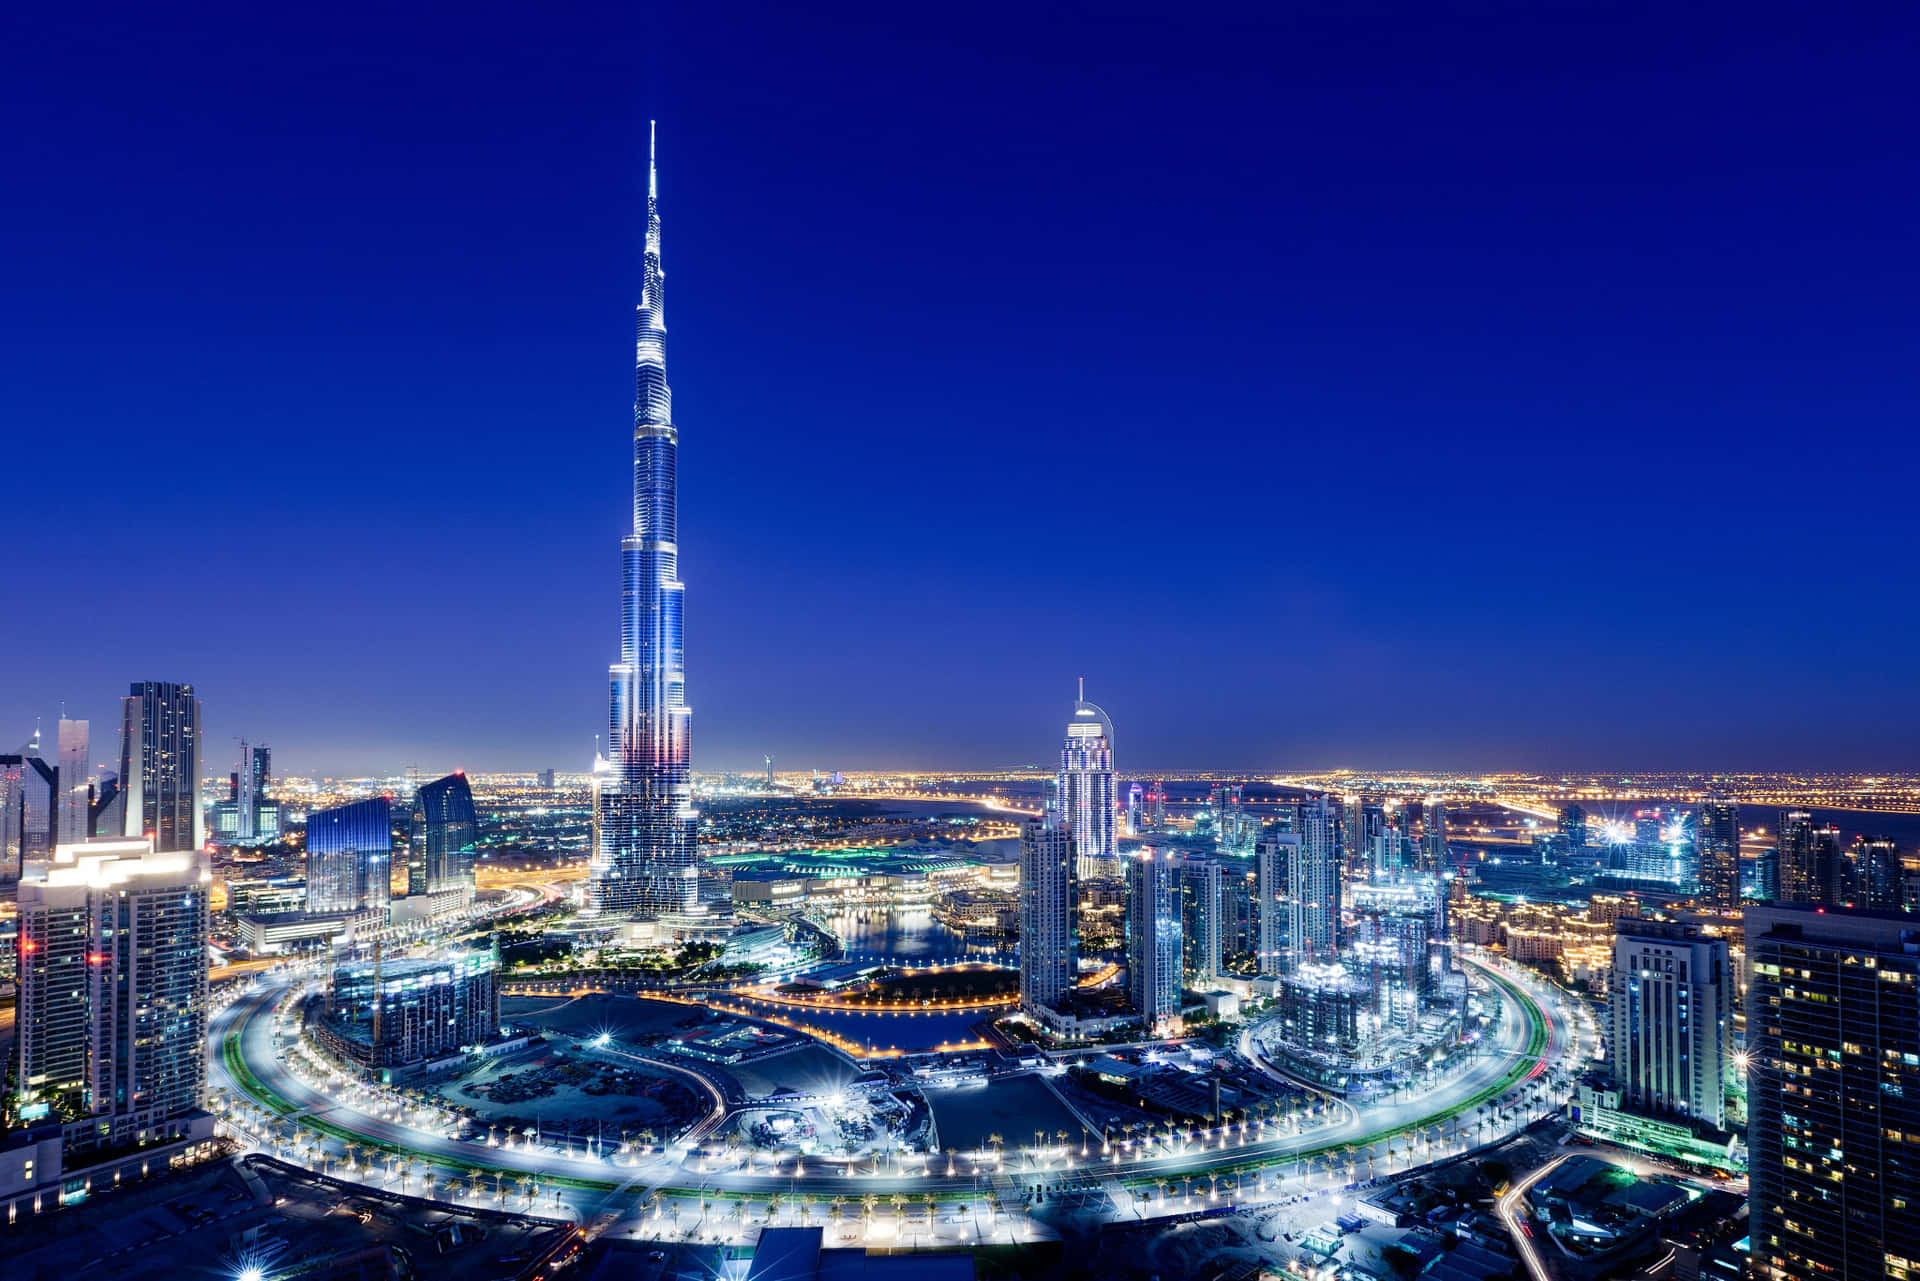 Majestic Burj Khalifa standing tall against a serene blue sky